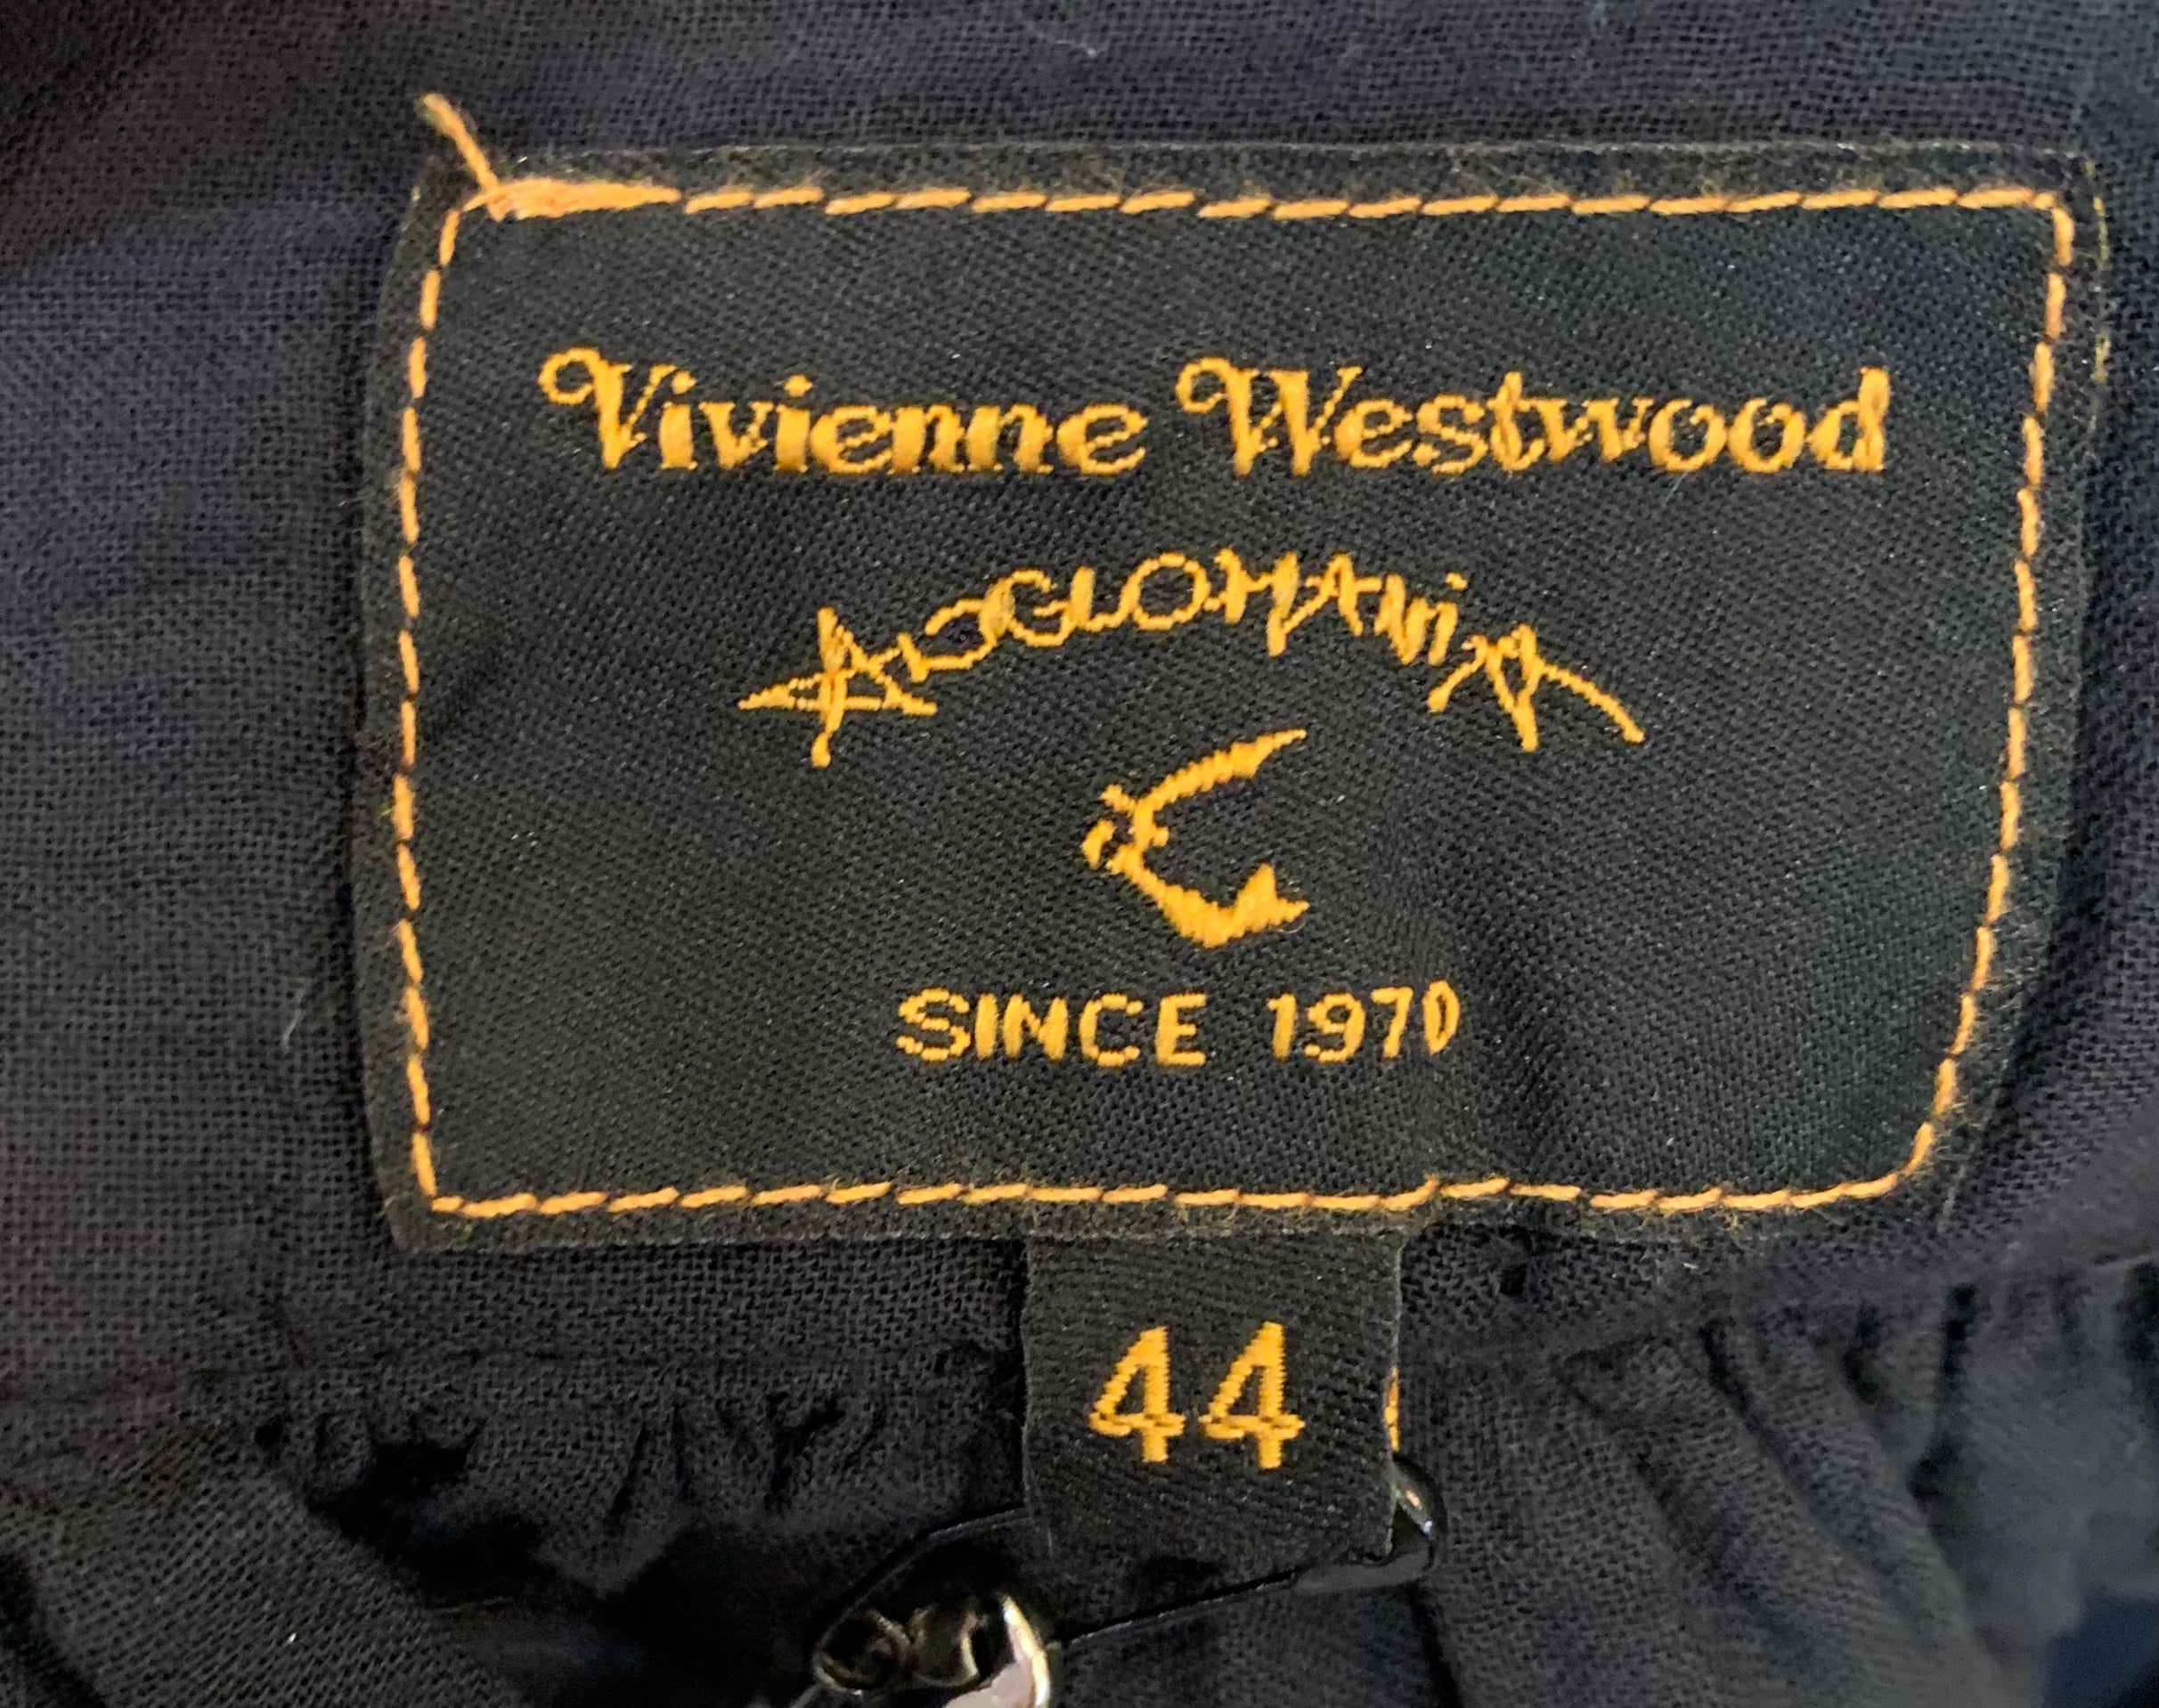 Vivienne Westwood Anglomania Black Cotton Mini Crini Skirt LABEL 5/5